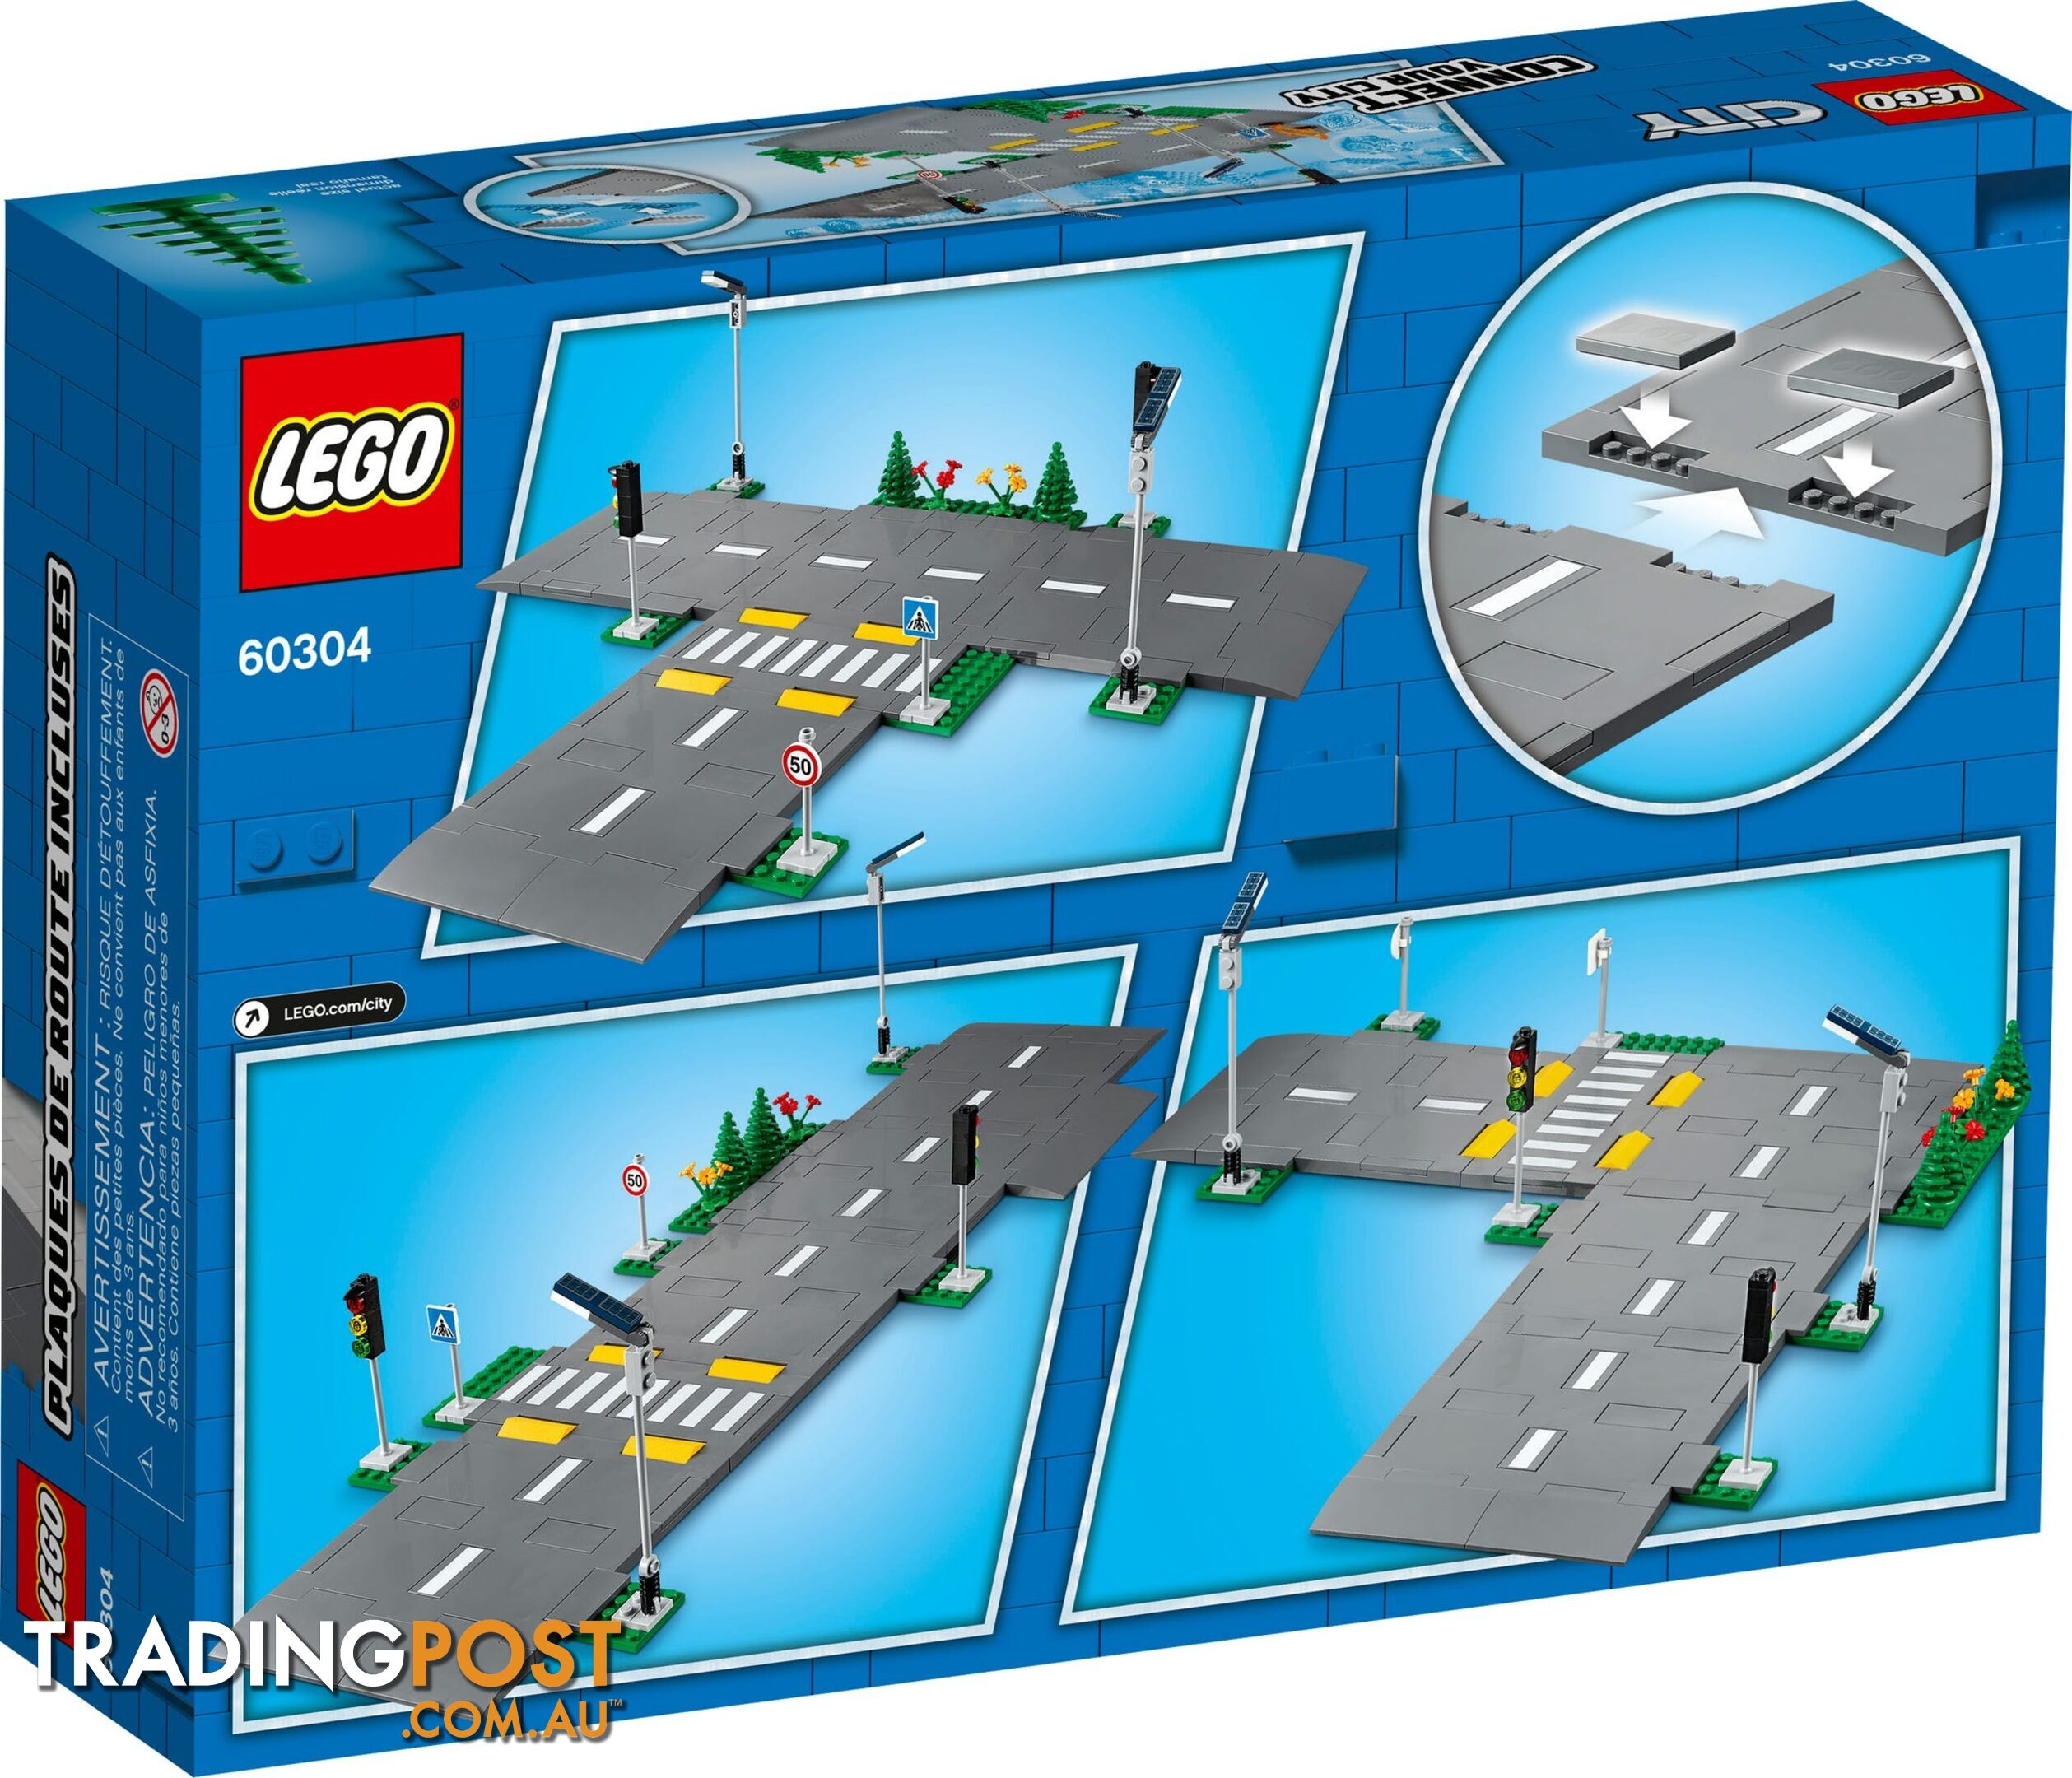 LEGO 60304 Road Plates - City - 5702016912289